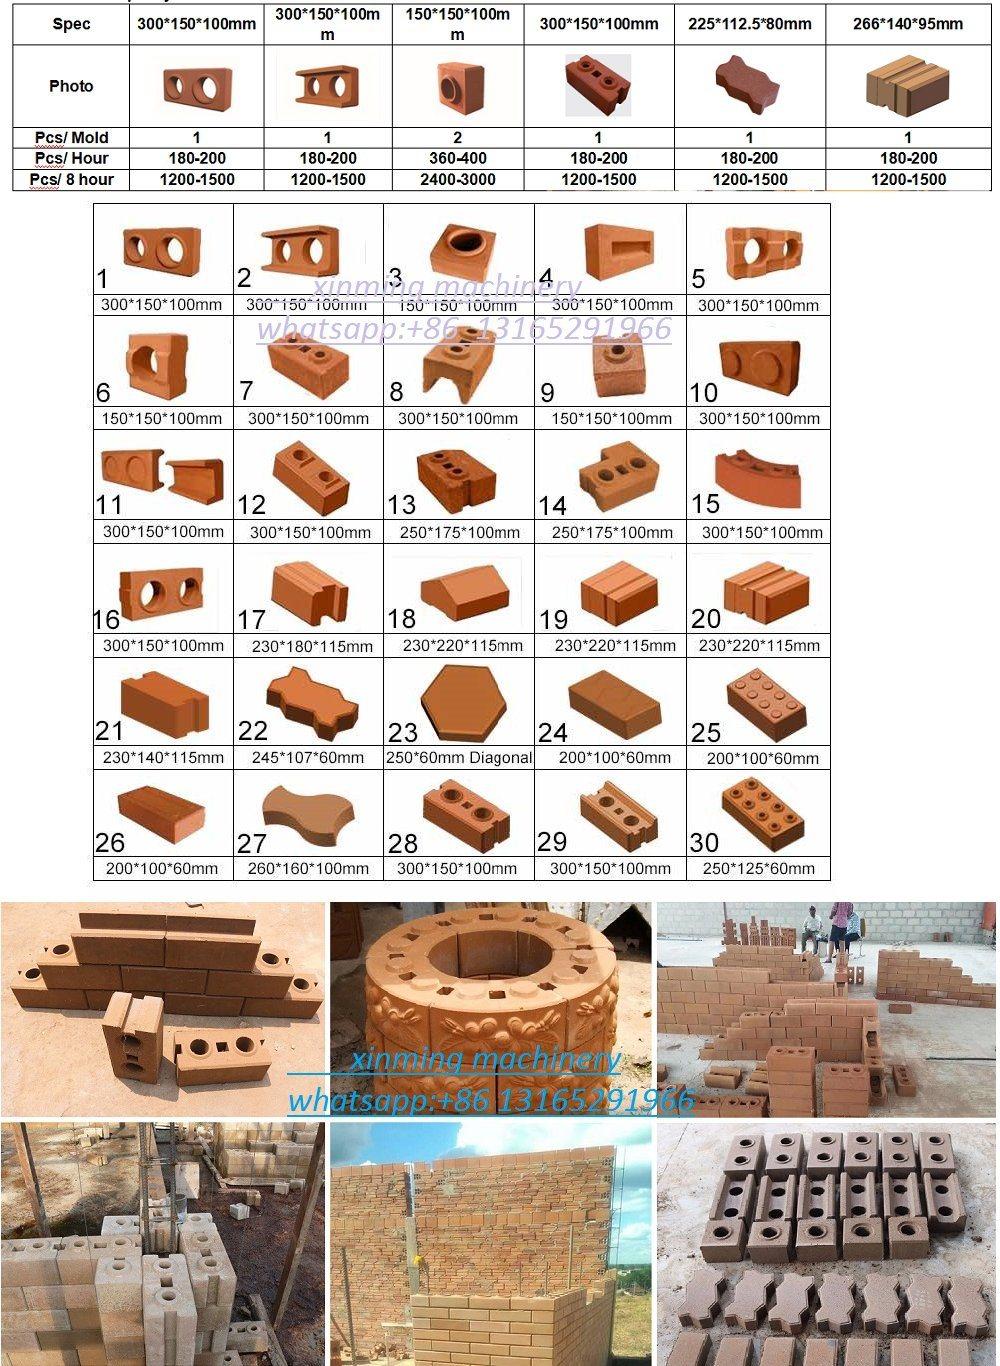 Xinming Xm2-25 Manual Clay Mud Brick Making Machine with Factory Price